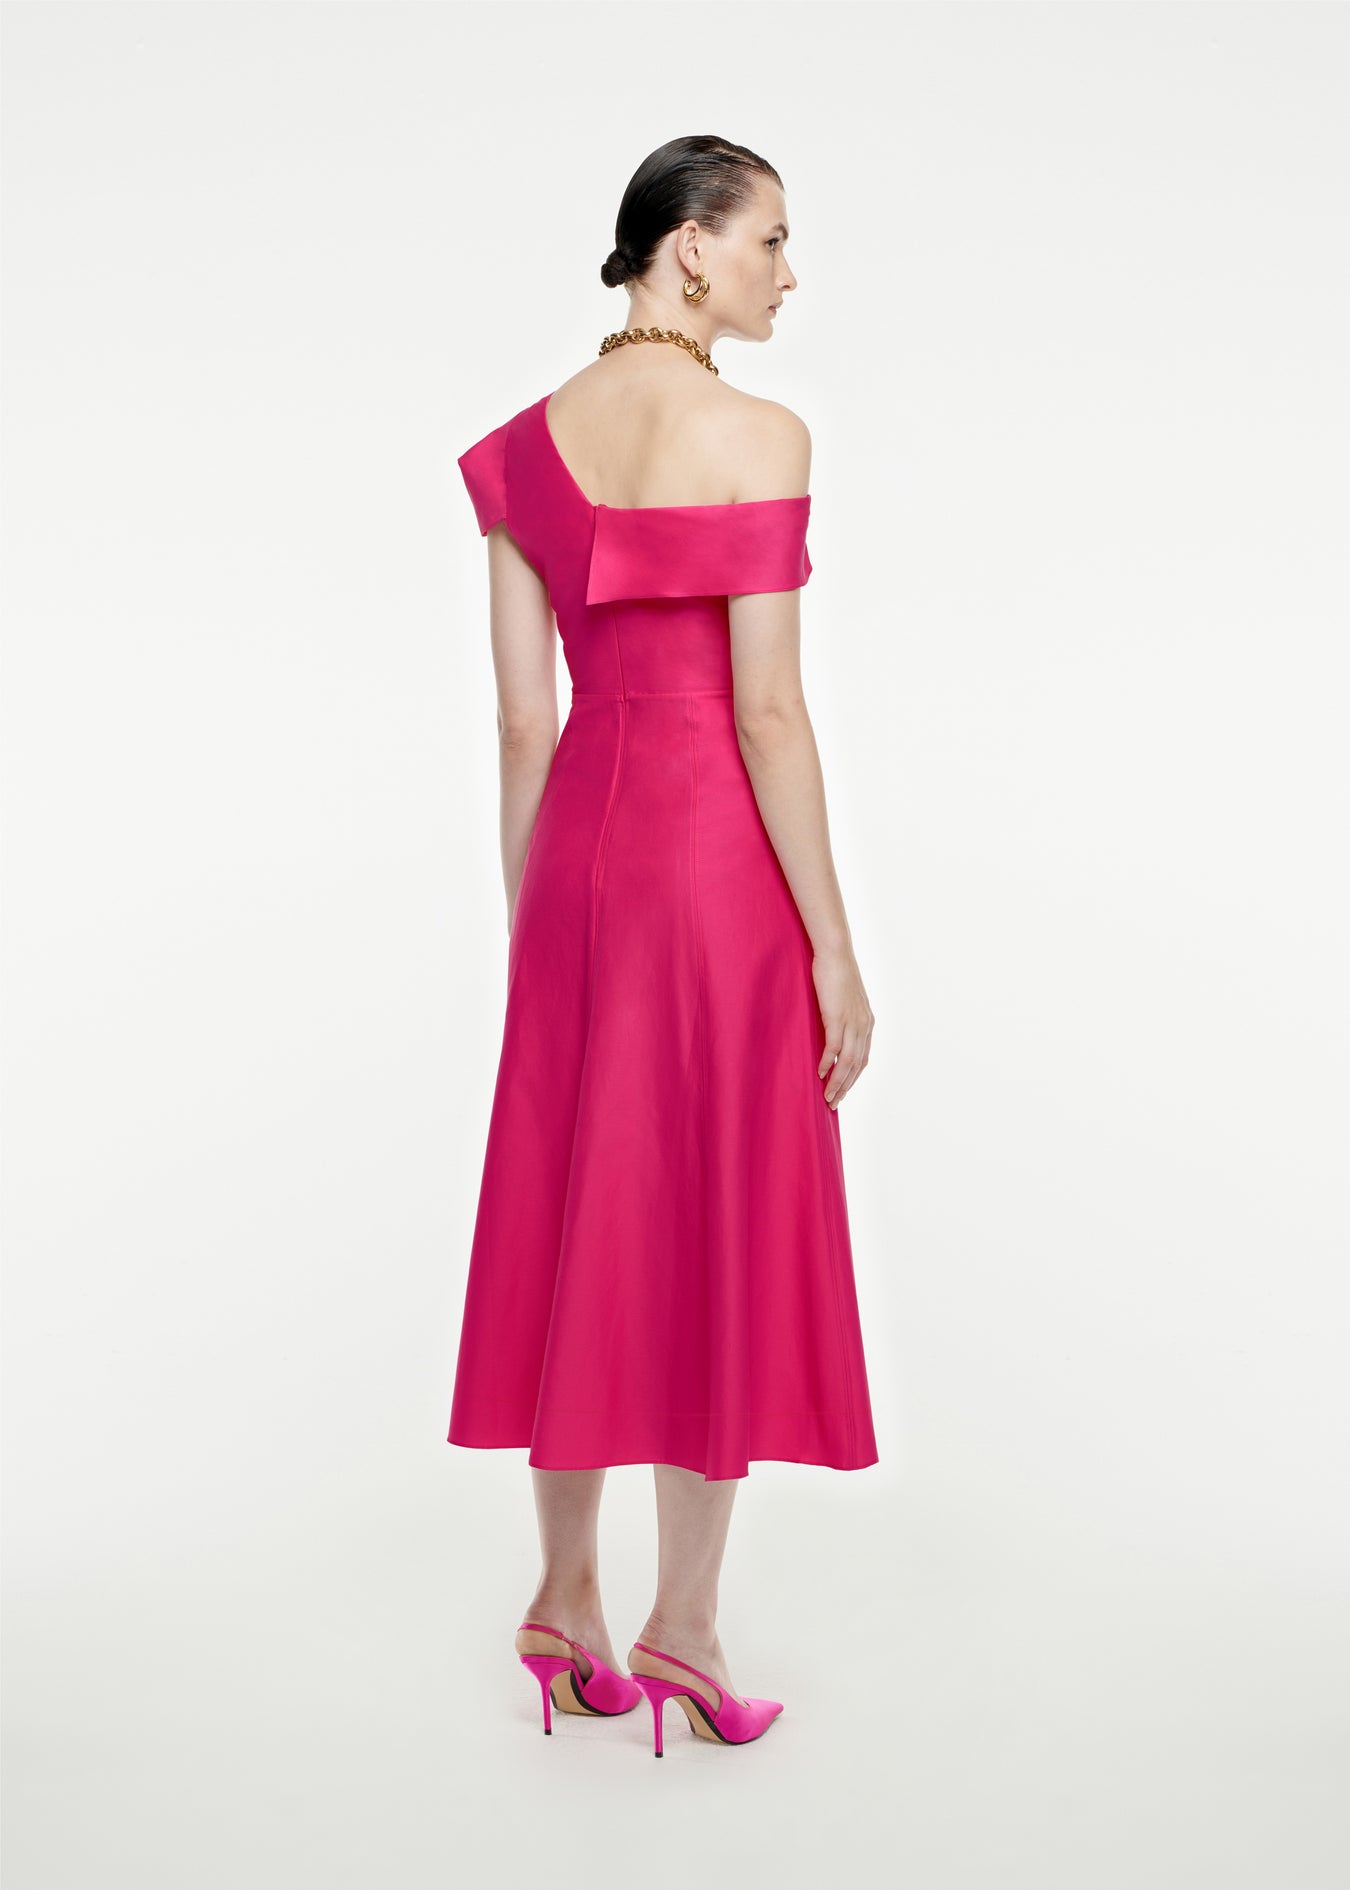 The back of a woman wearing the Asymmetric Cotton Poplin Midi Dress in Pink